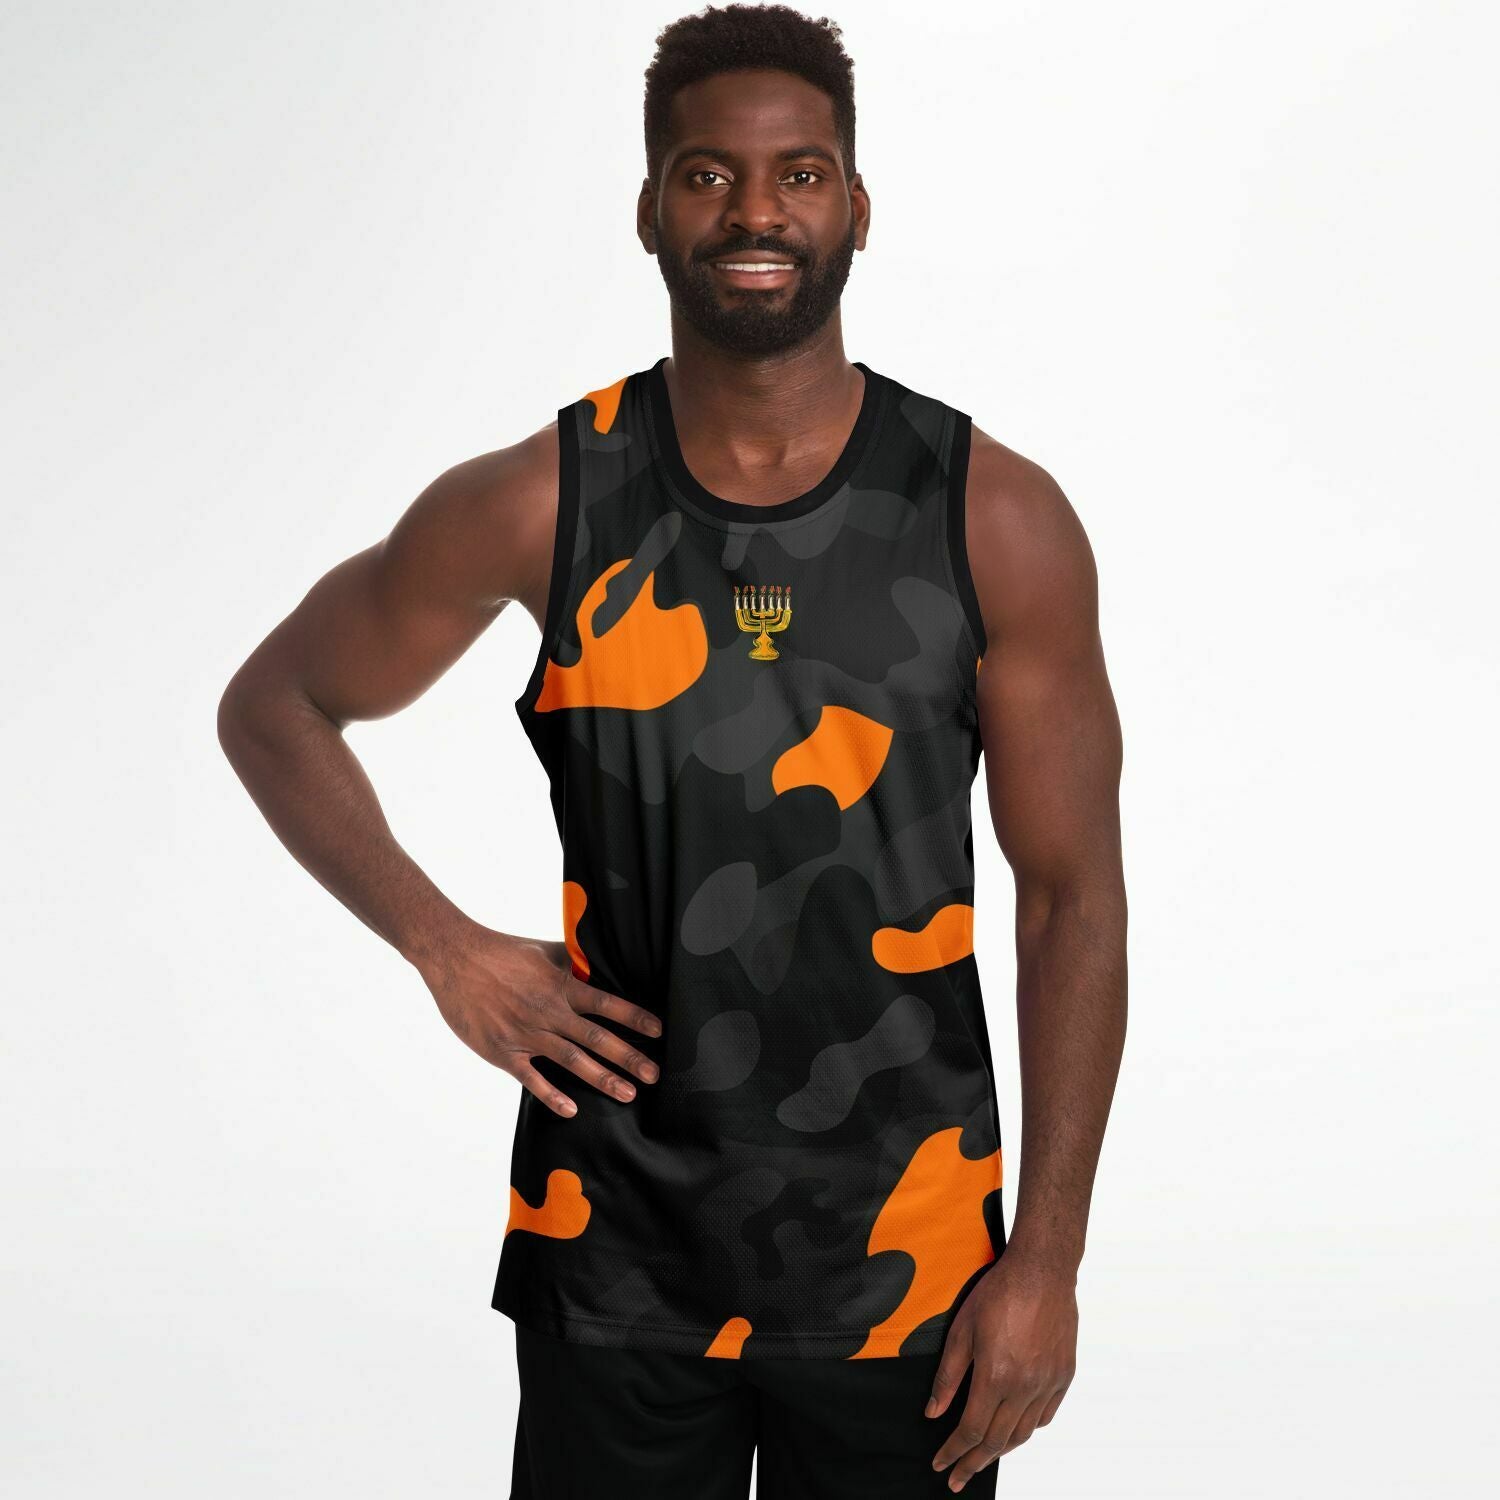 Camo Orange Premium Fit Basketball Jersey